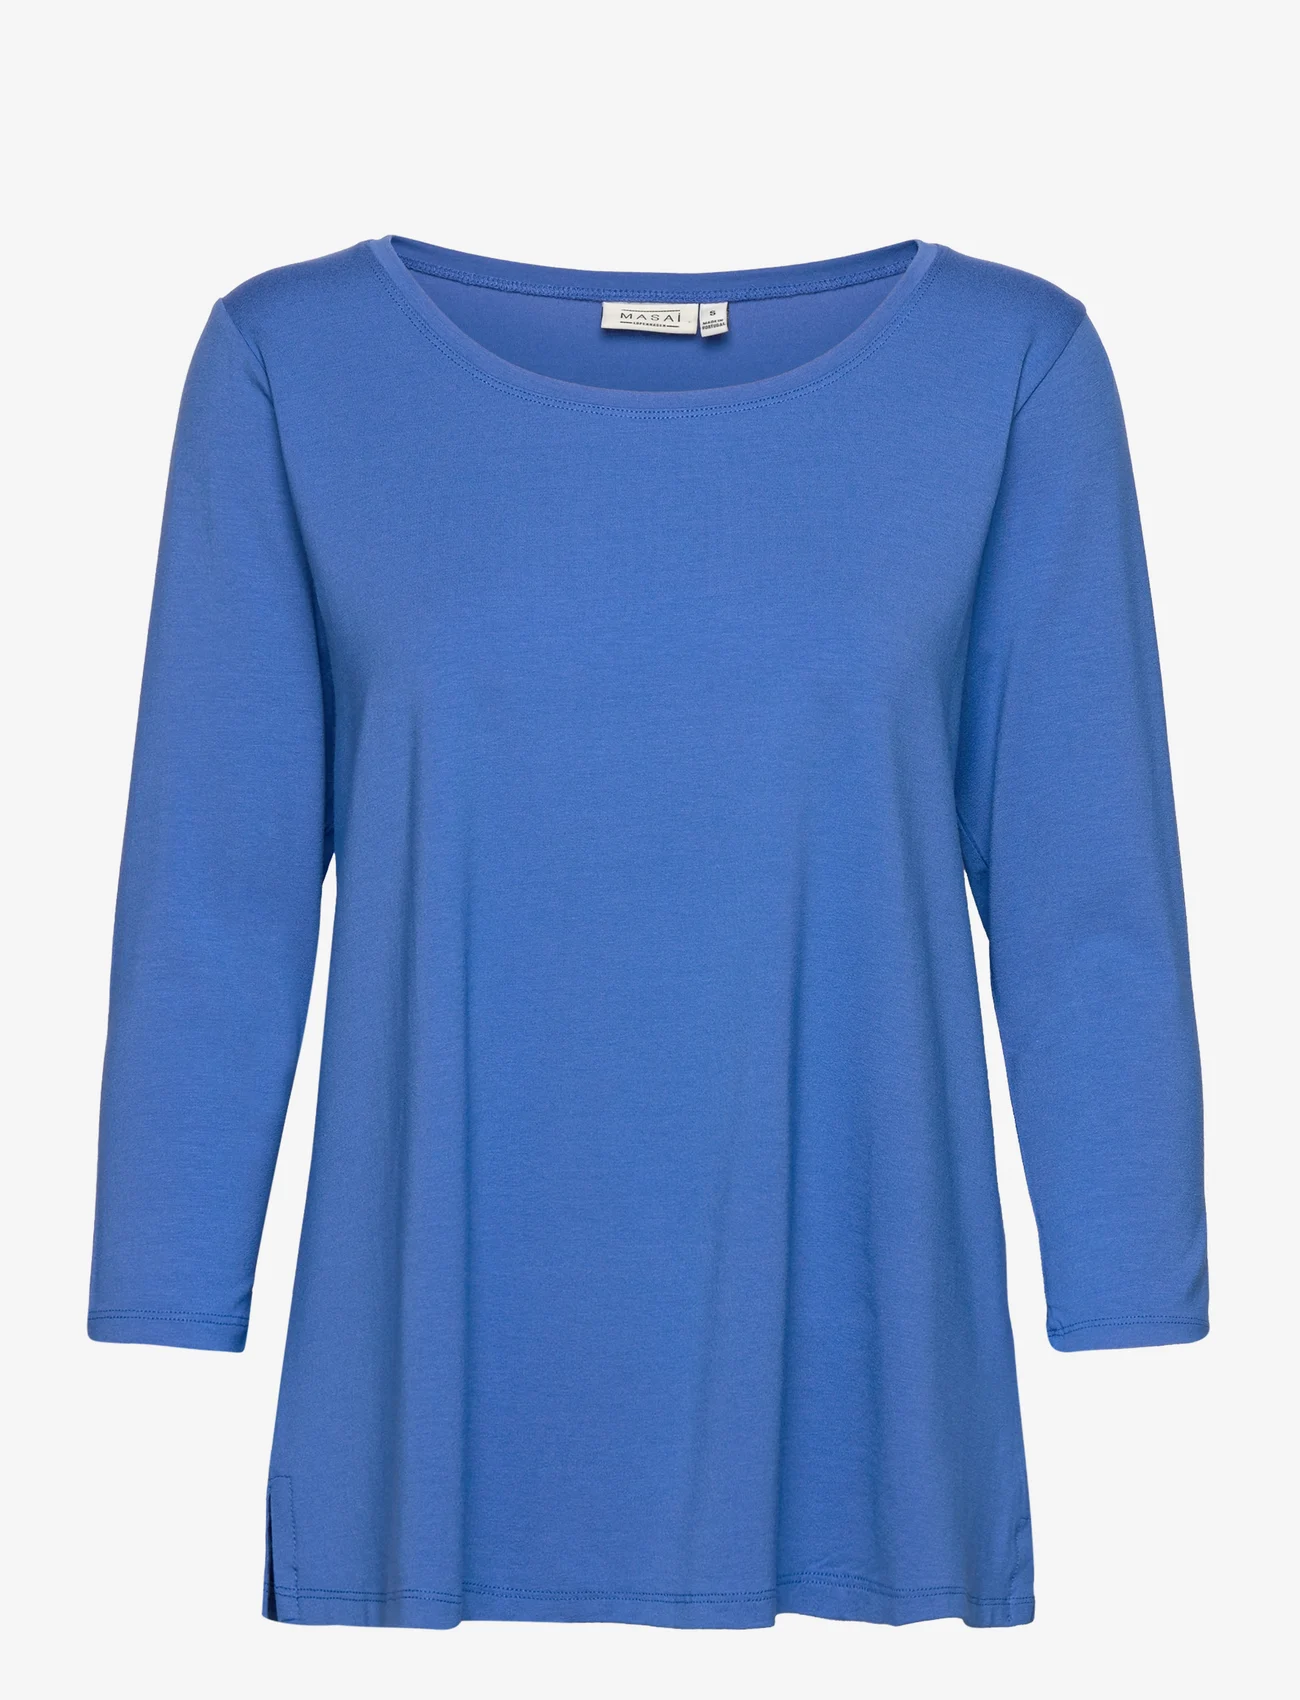 Masai - MaCecille - t-shirt & tops - nebulas blue - 0